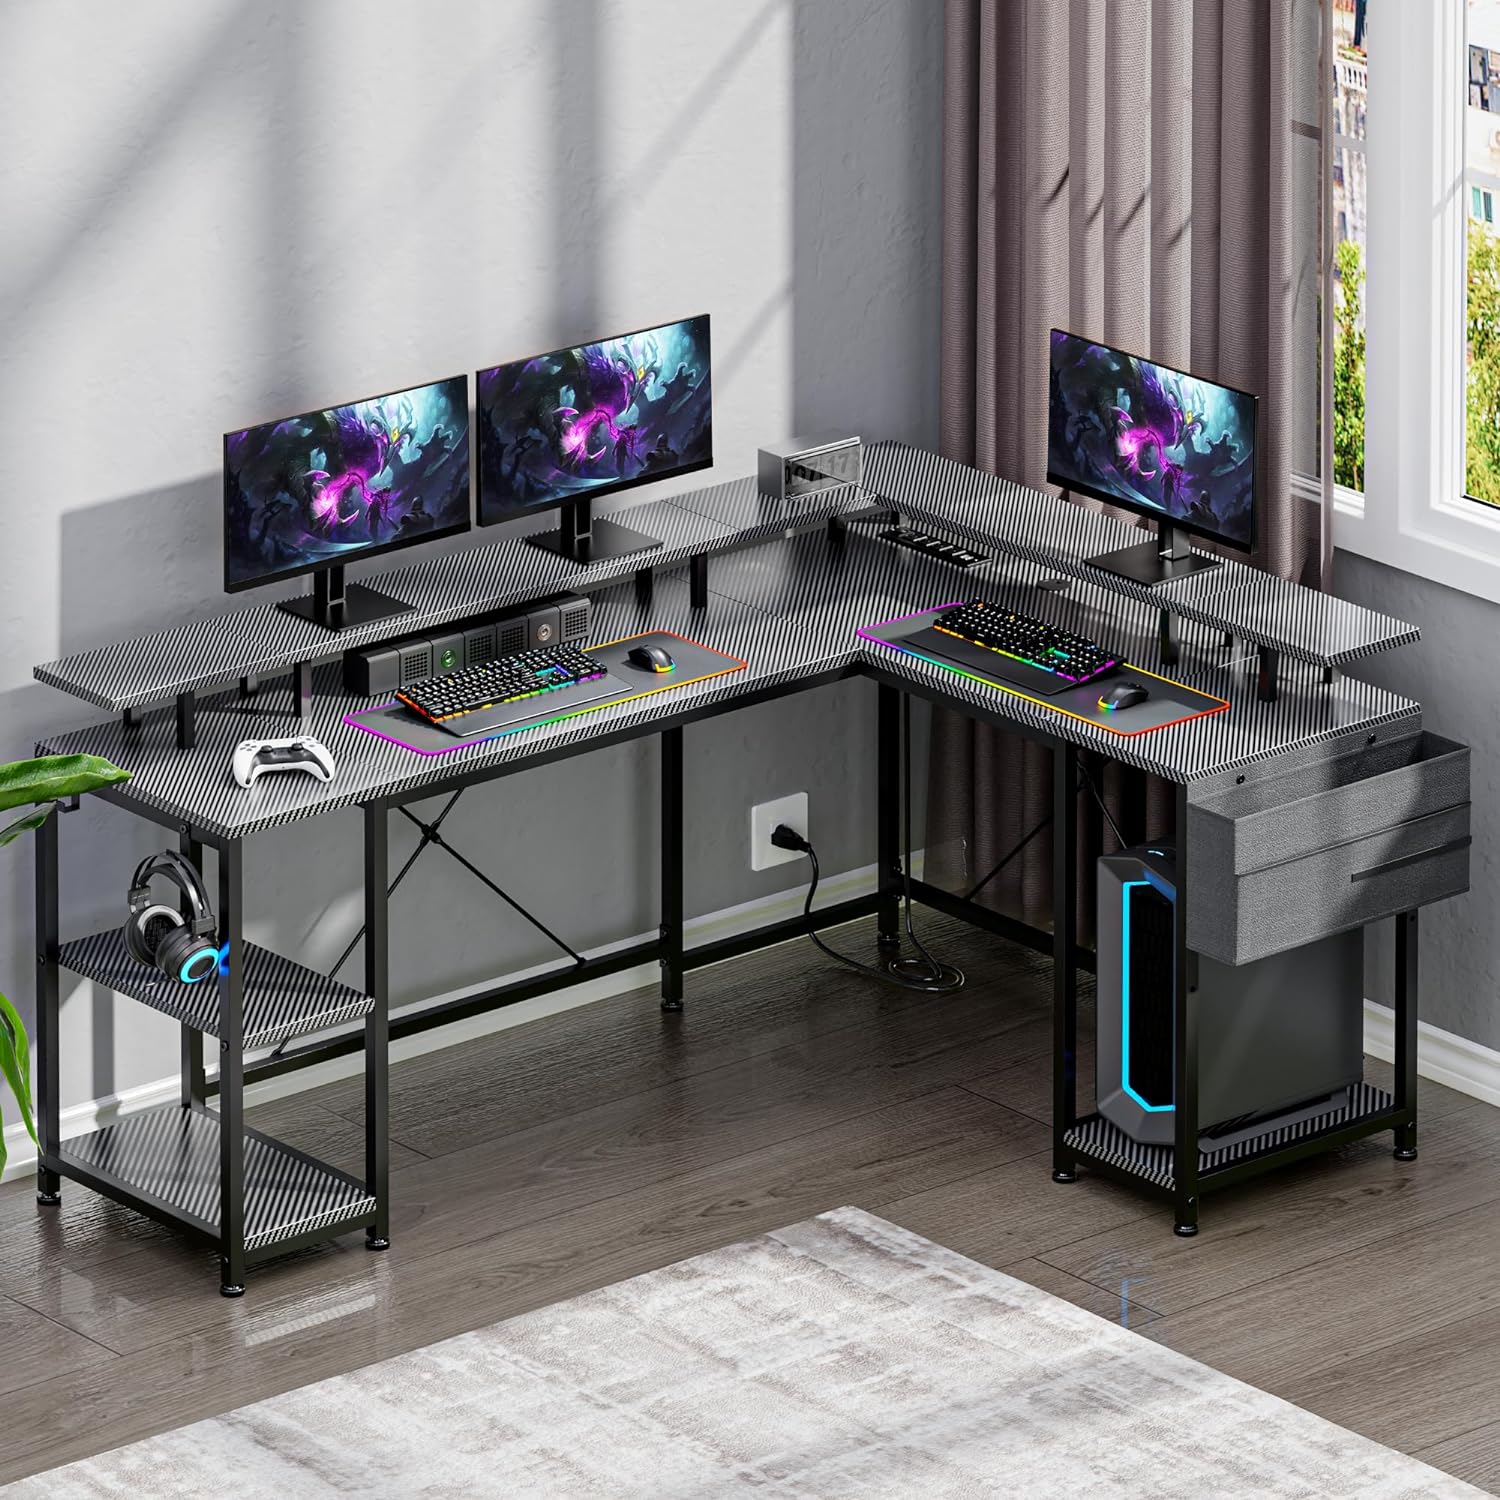 Lulive L Shaped Gaming Desk, 95 Reversible Corner Computer Desk with Power Outlet LED Strip, Home Office Desk with Monitor Stand, Storage Shelf and Storage Bag (Carbon Fiber Black) : Home Kitchen